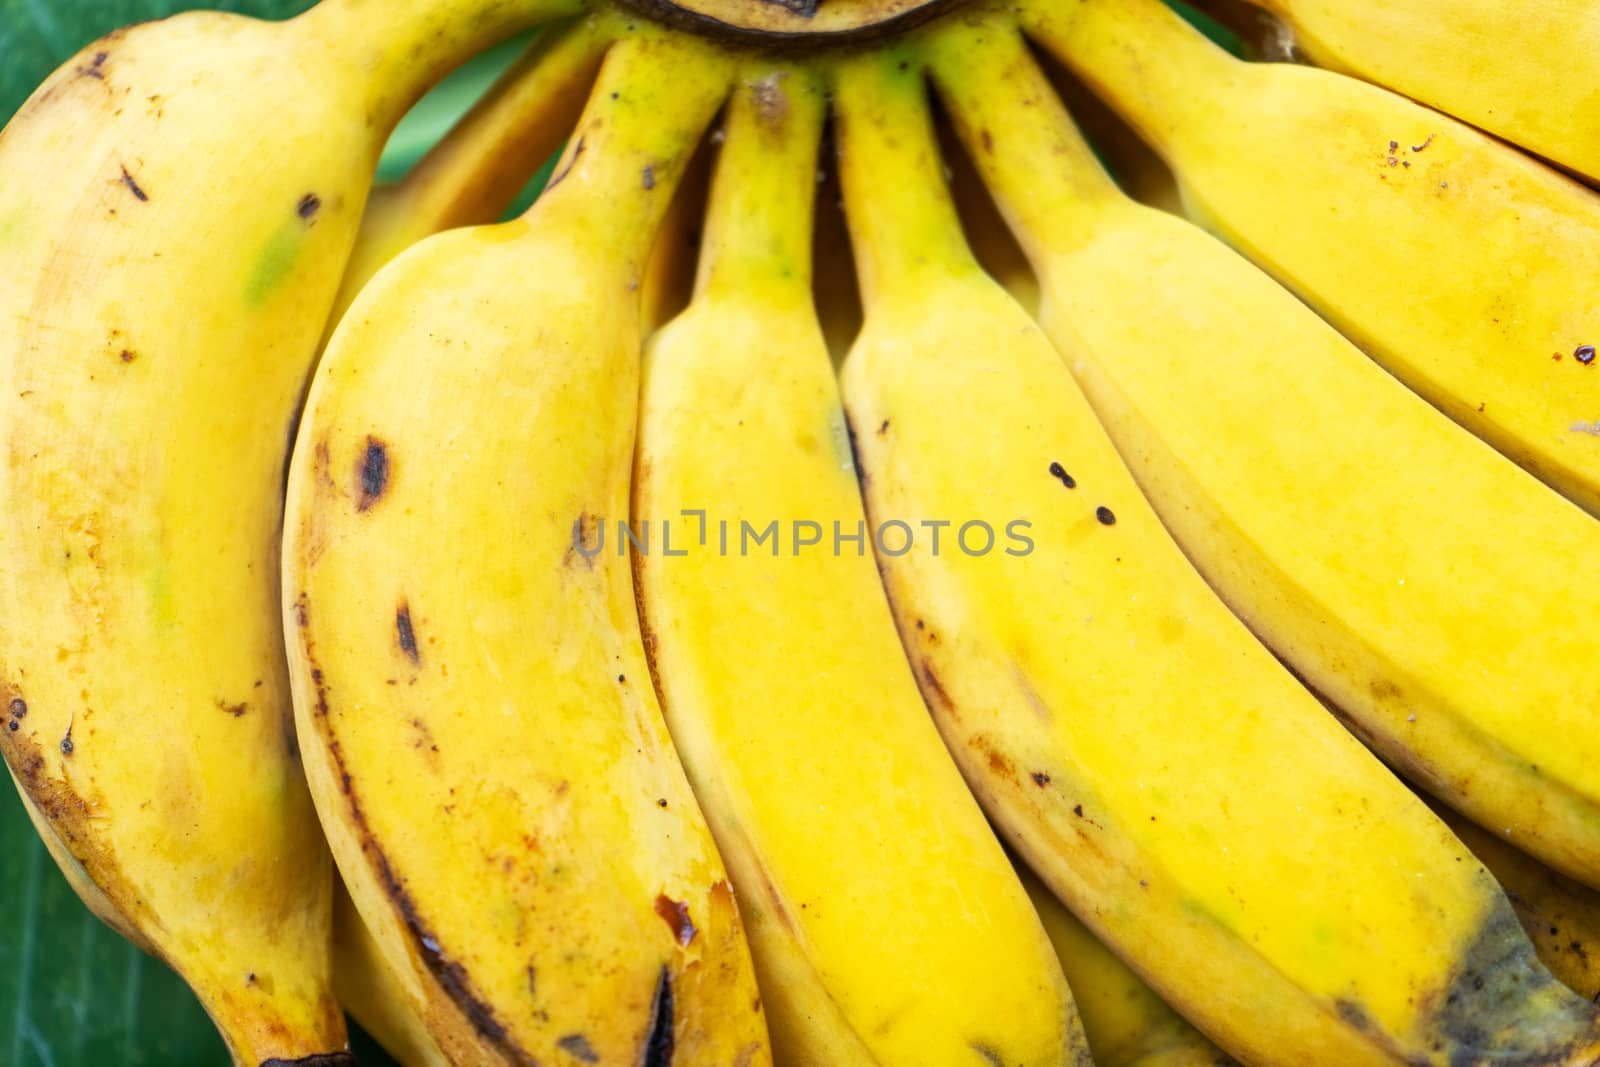 A branch of juicy yellow bananas close up